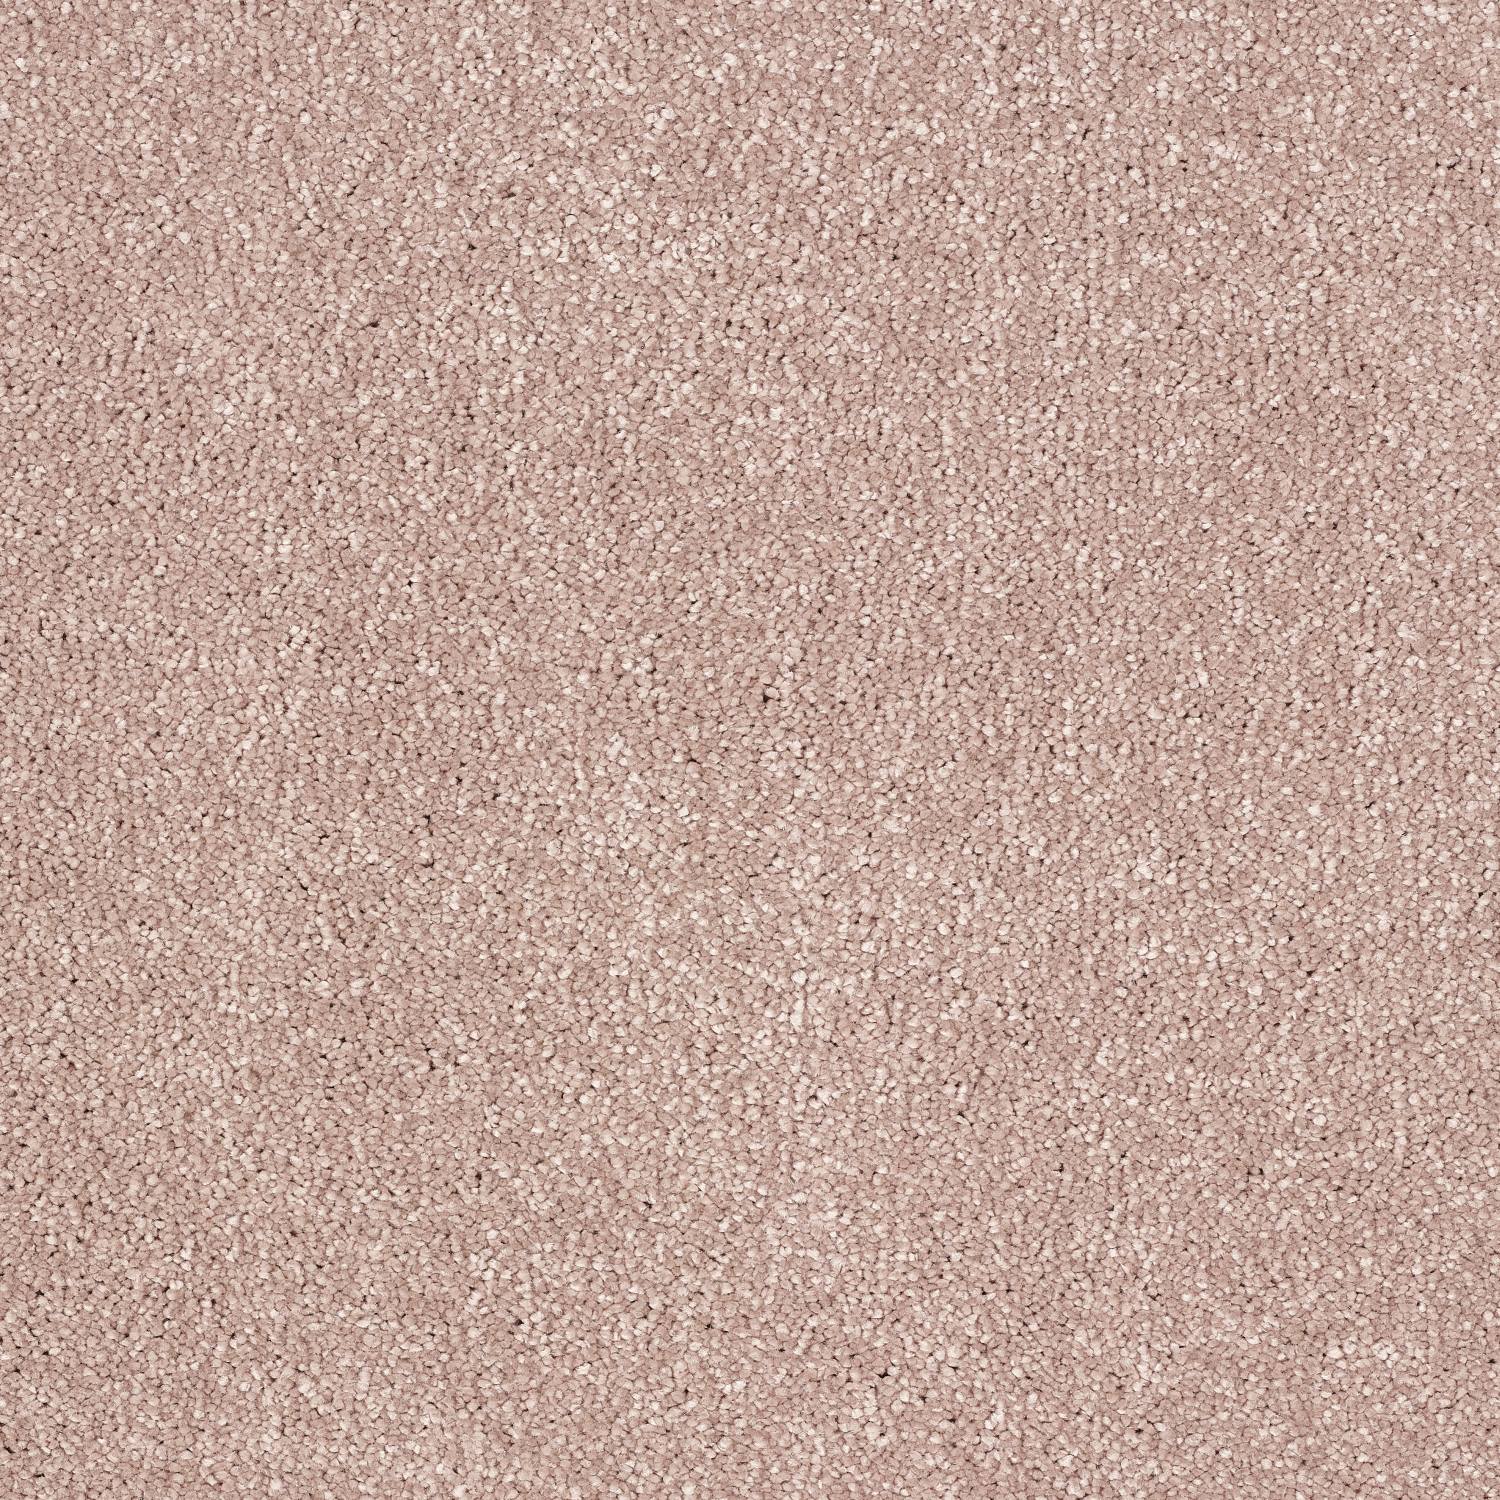 Stainfree Panache Twist Carpet - 23 Dusky Pink